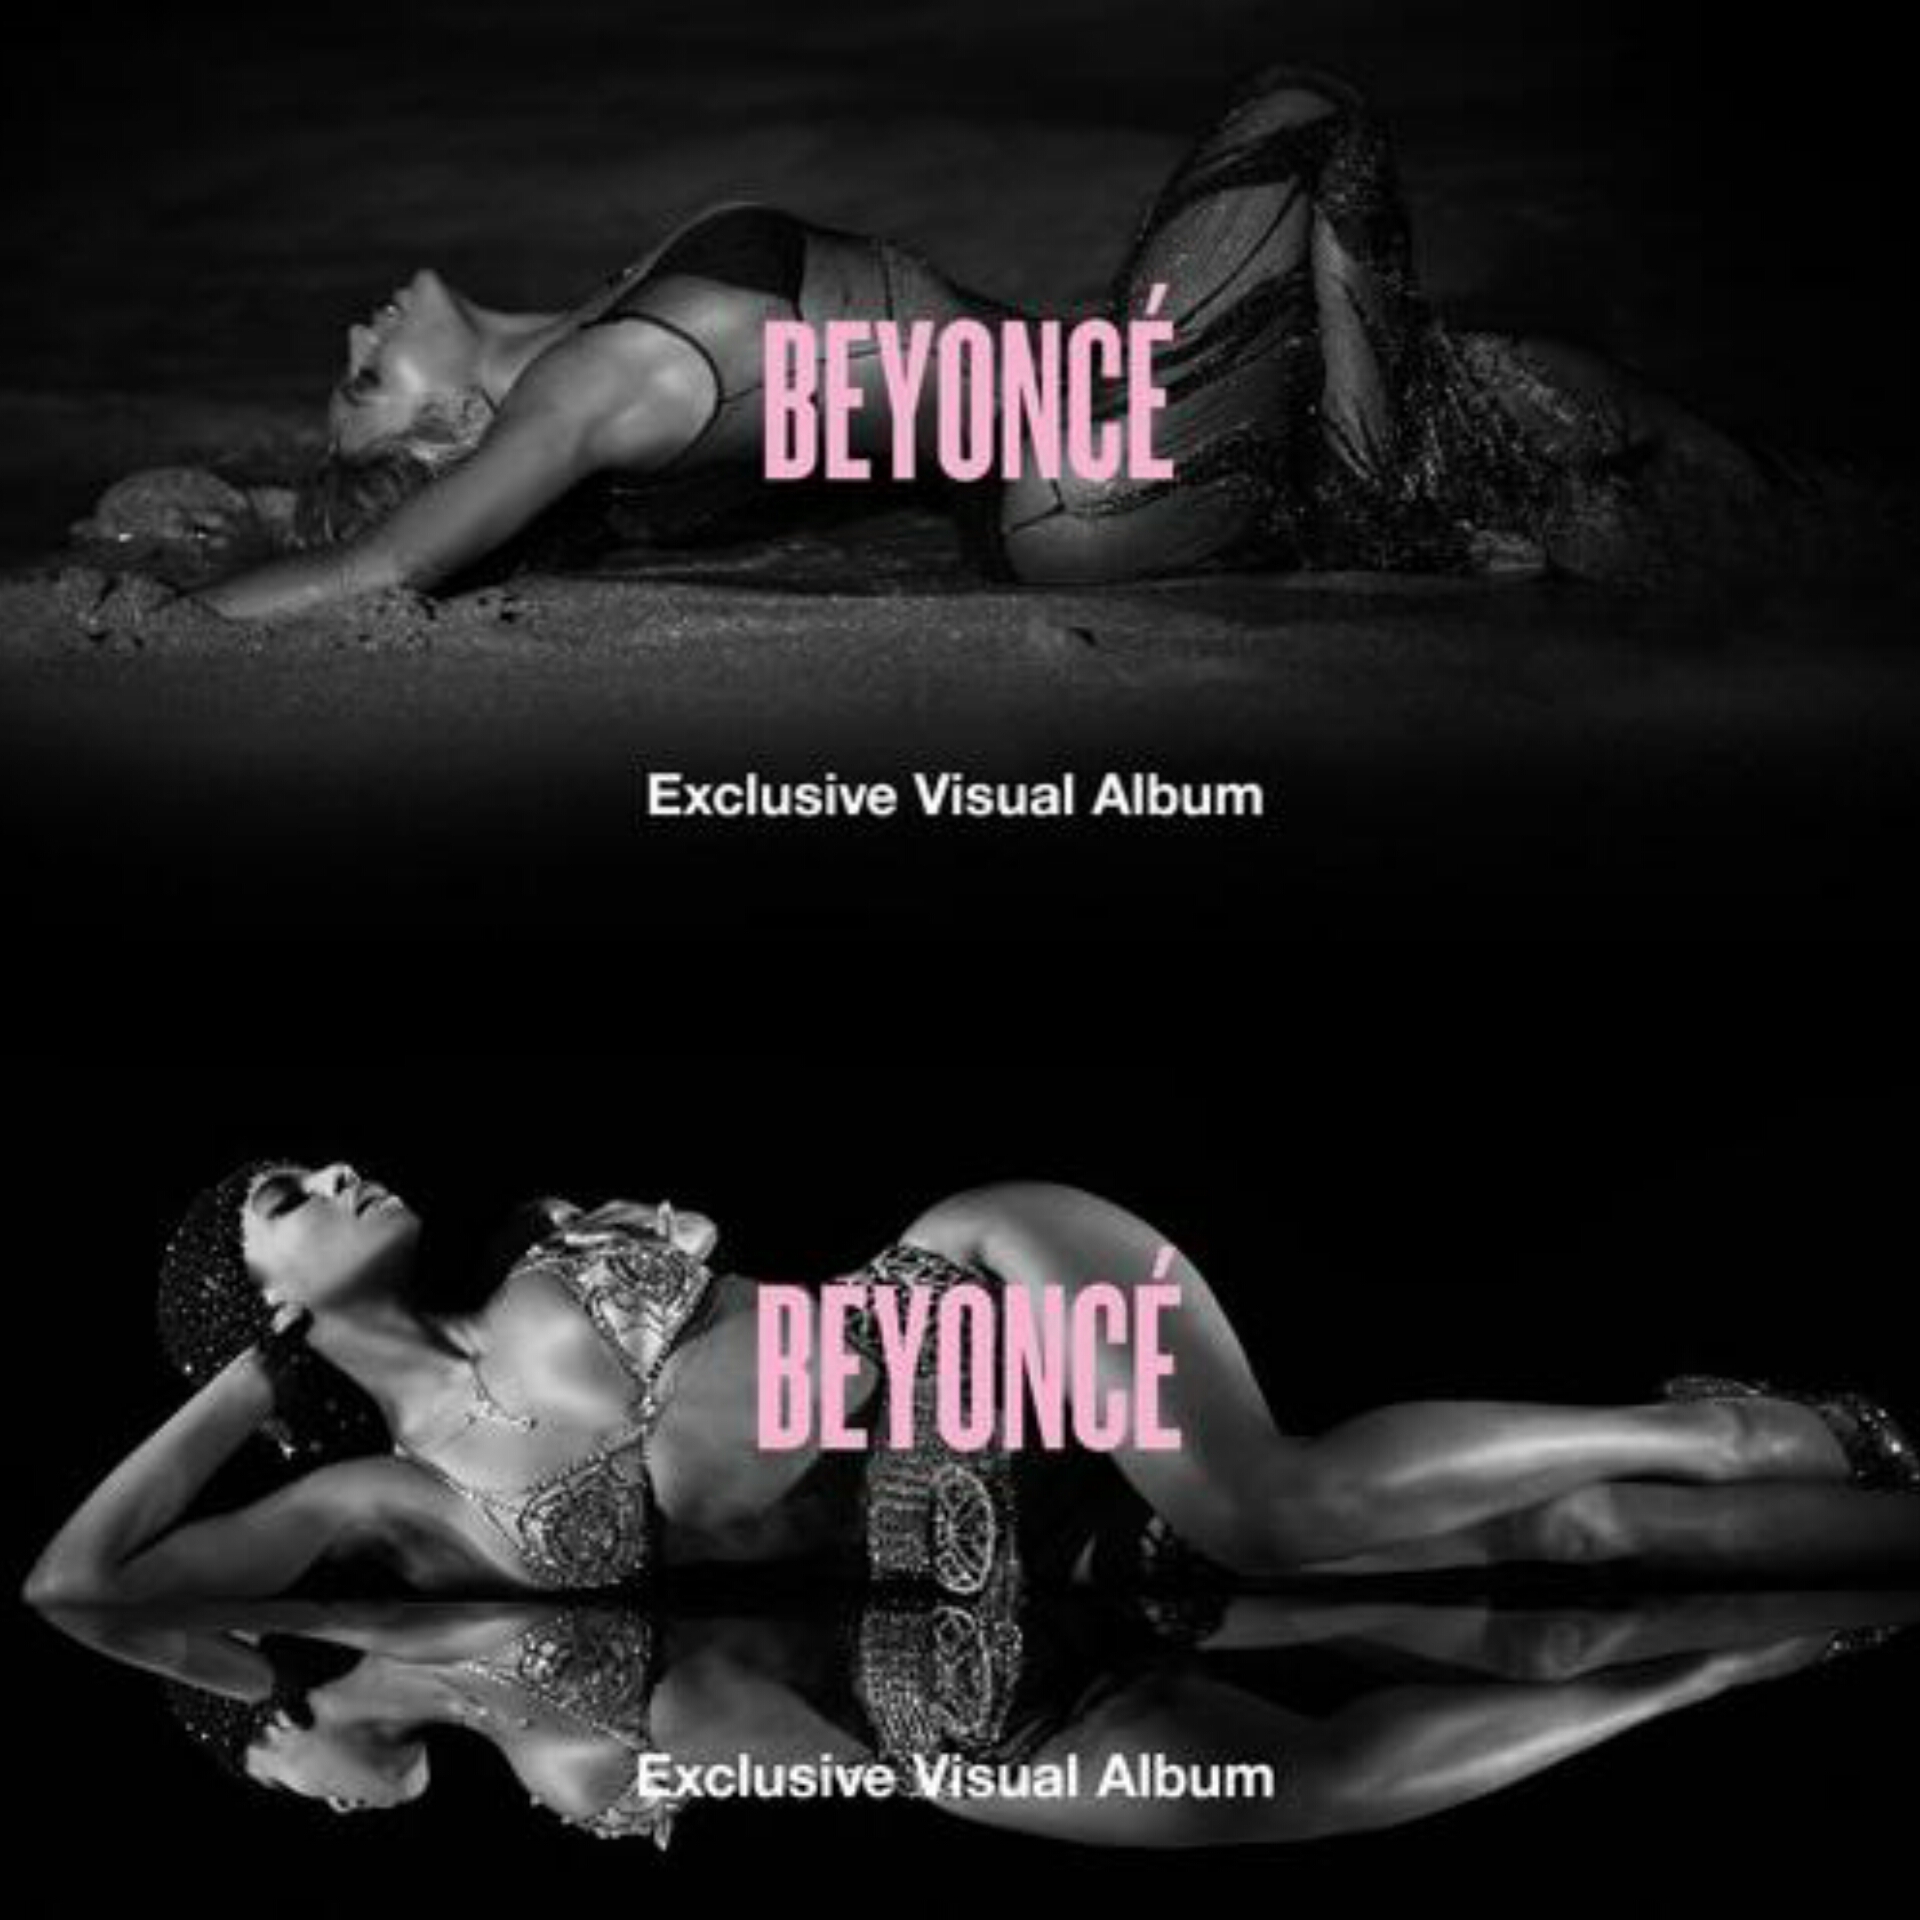 My take on Beyonce (the album)